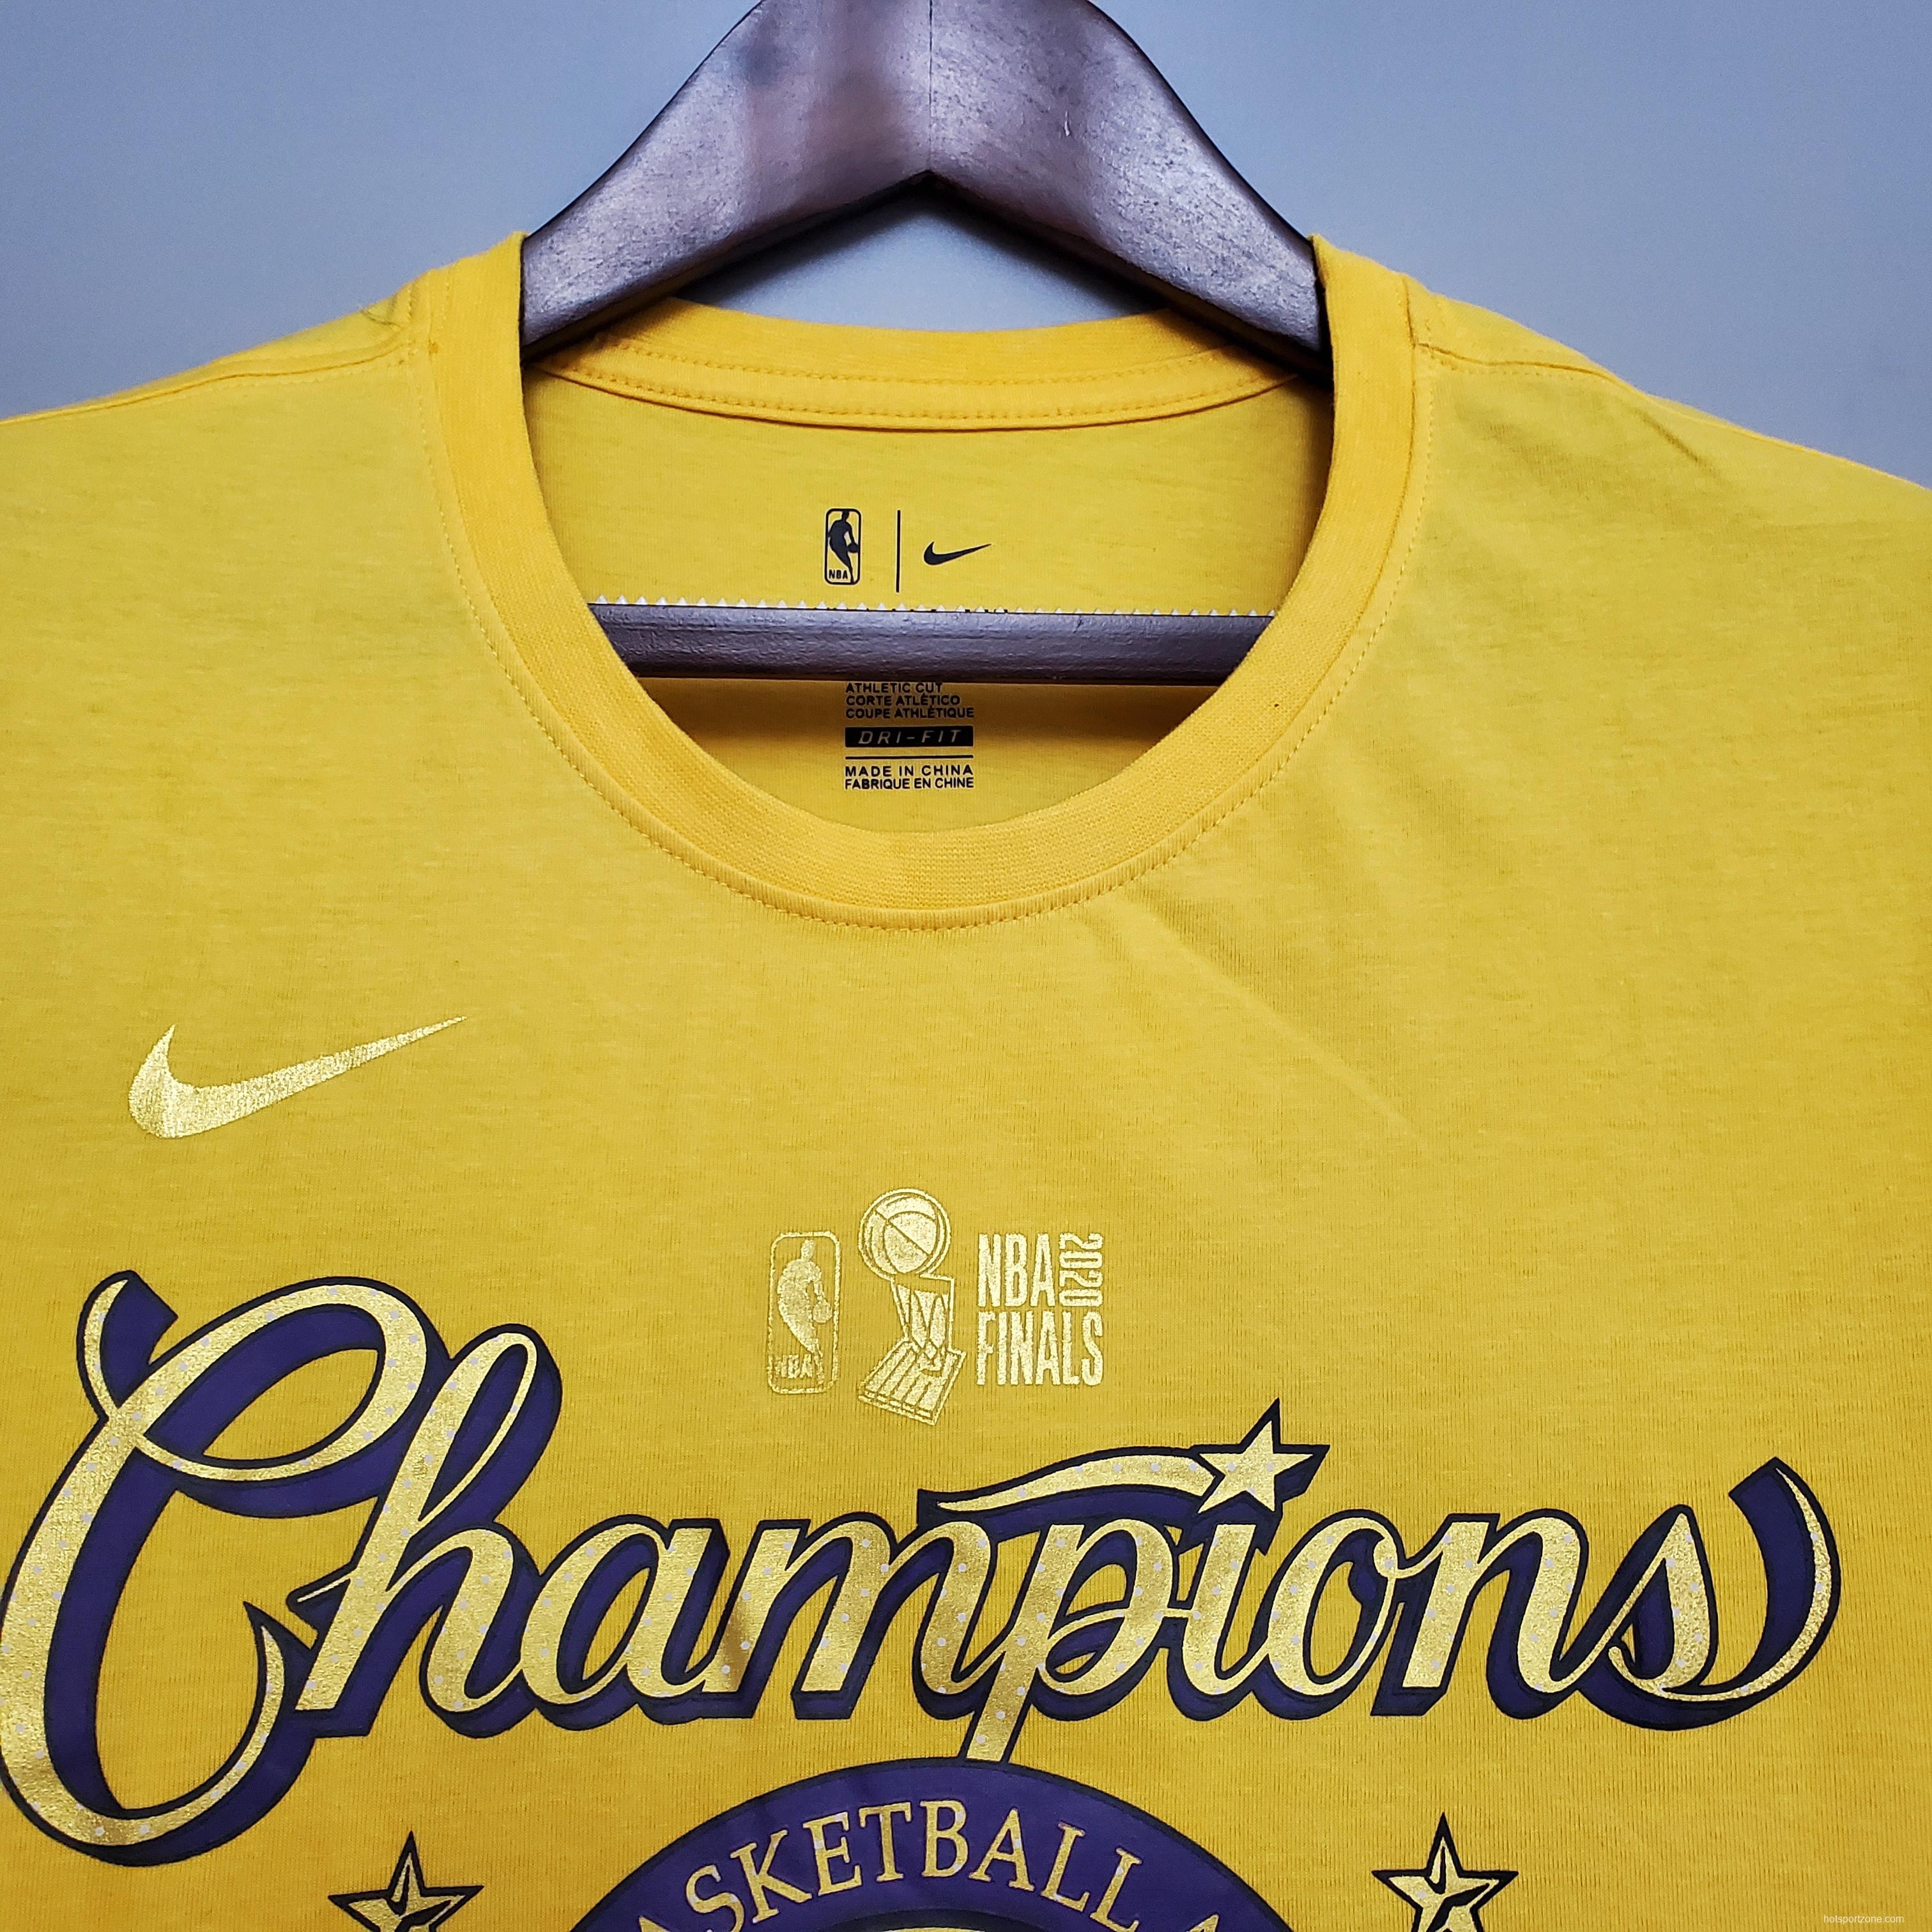 Lakers championship shirt yellow